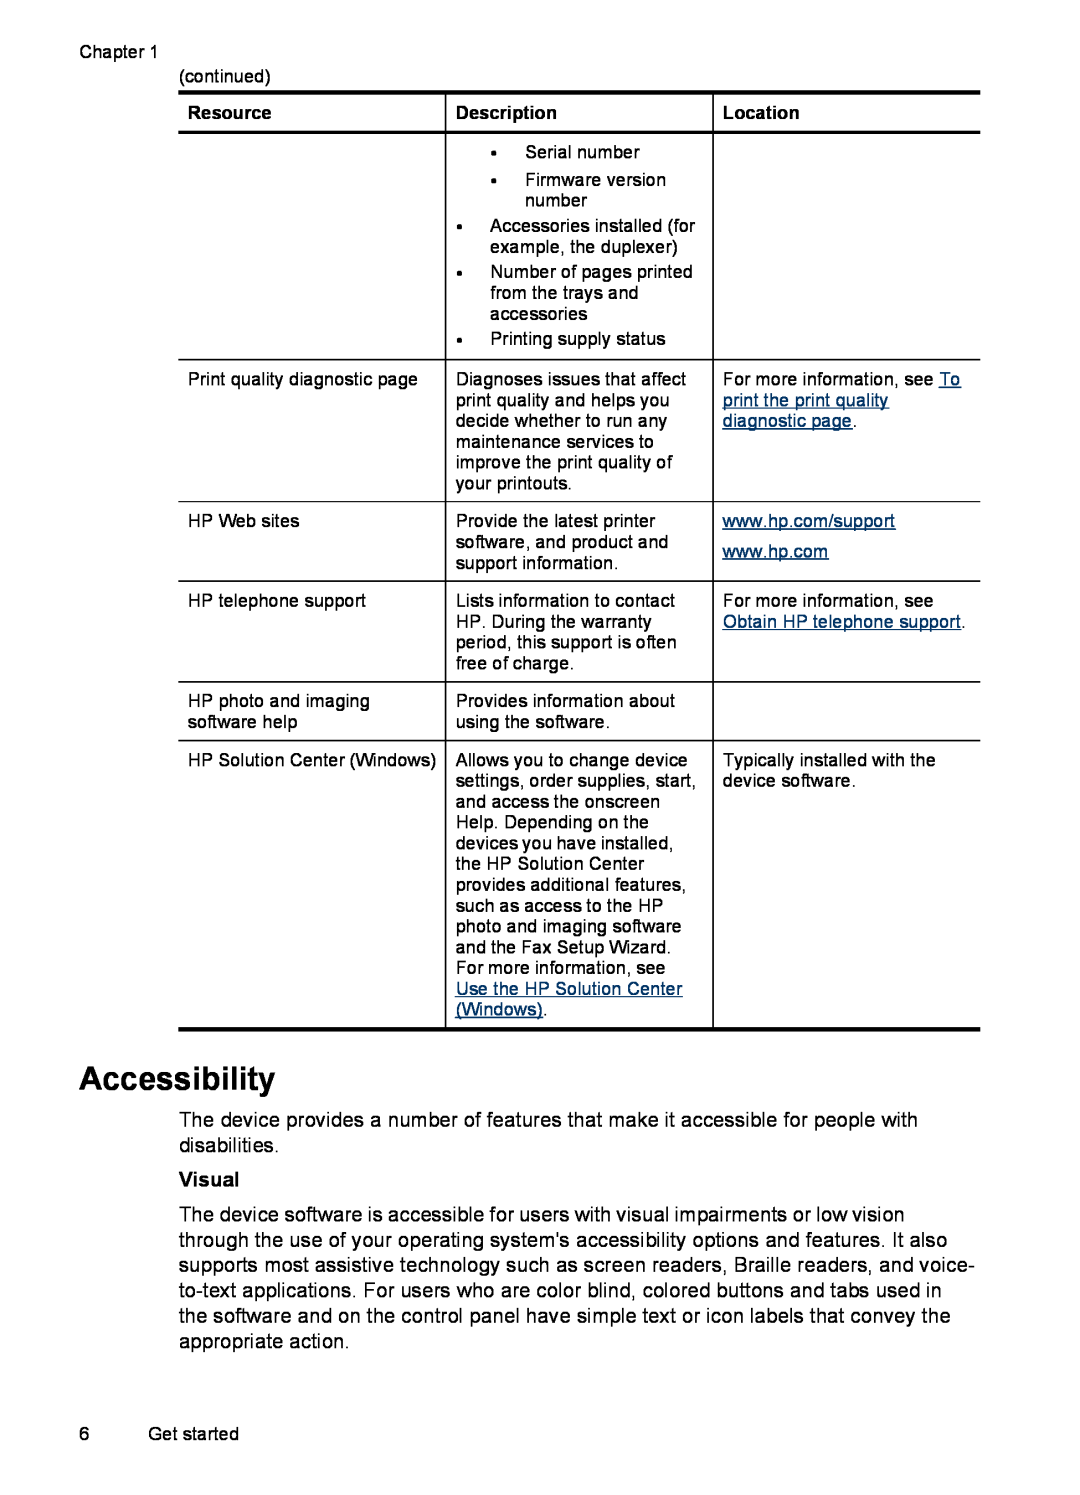 HP Pro K5400, K5300 manual Accessibility, Visual 